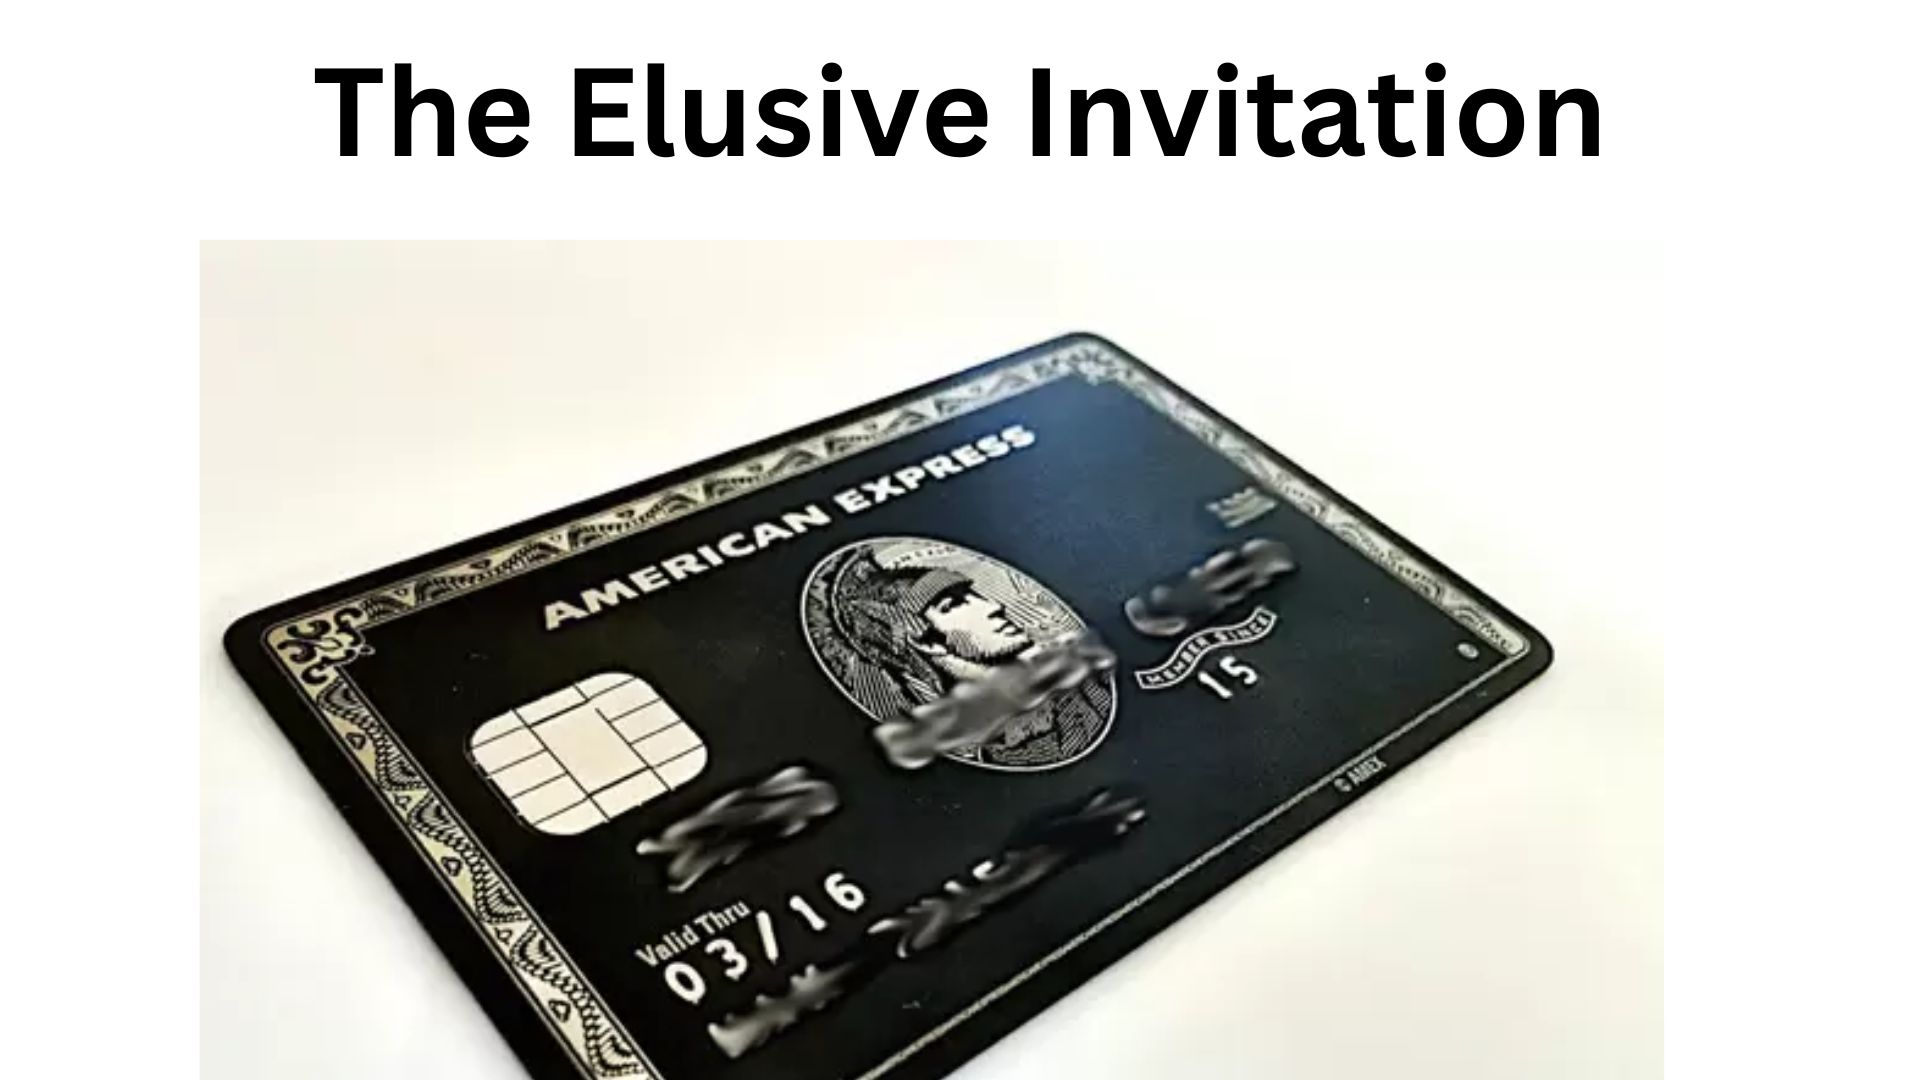 The Elusive Invitation